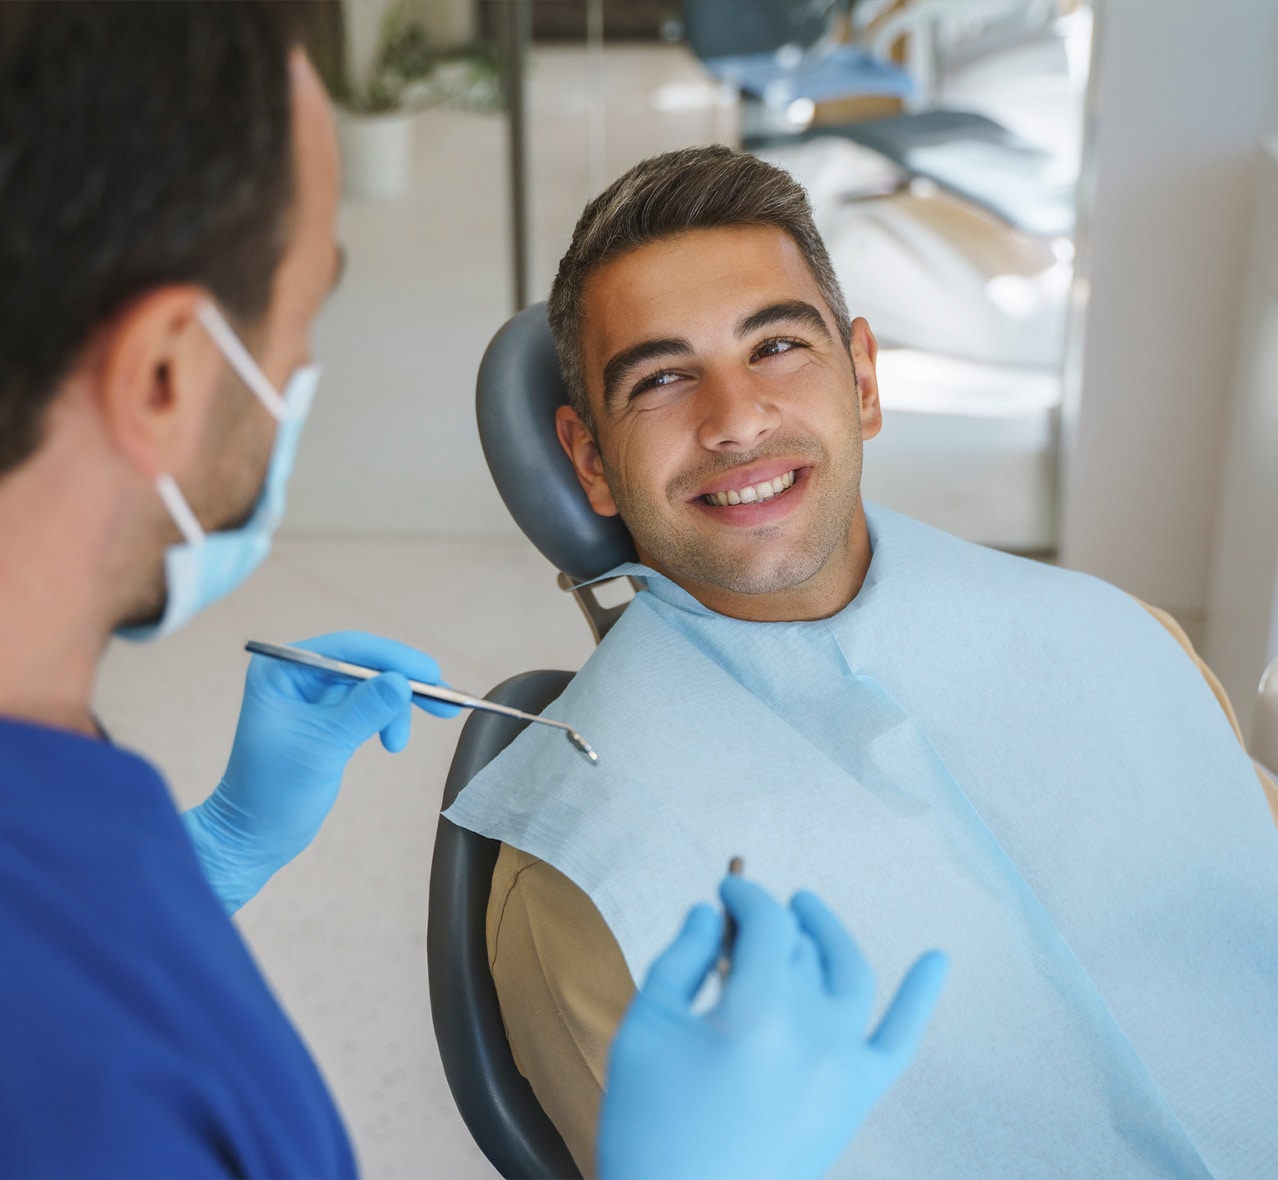 Dentist preparing to clean a patient's teeth